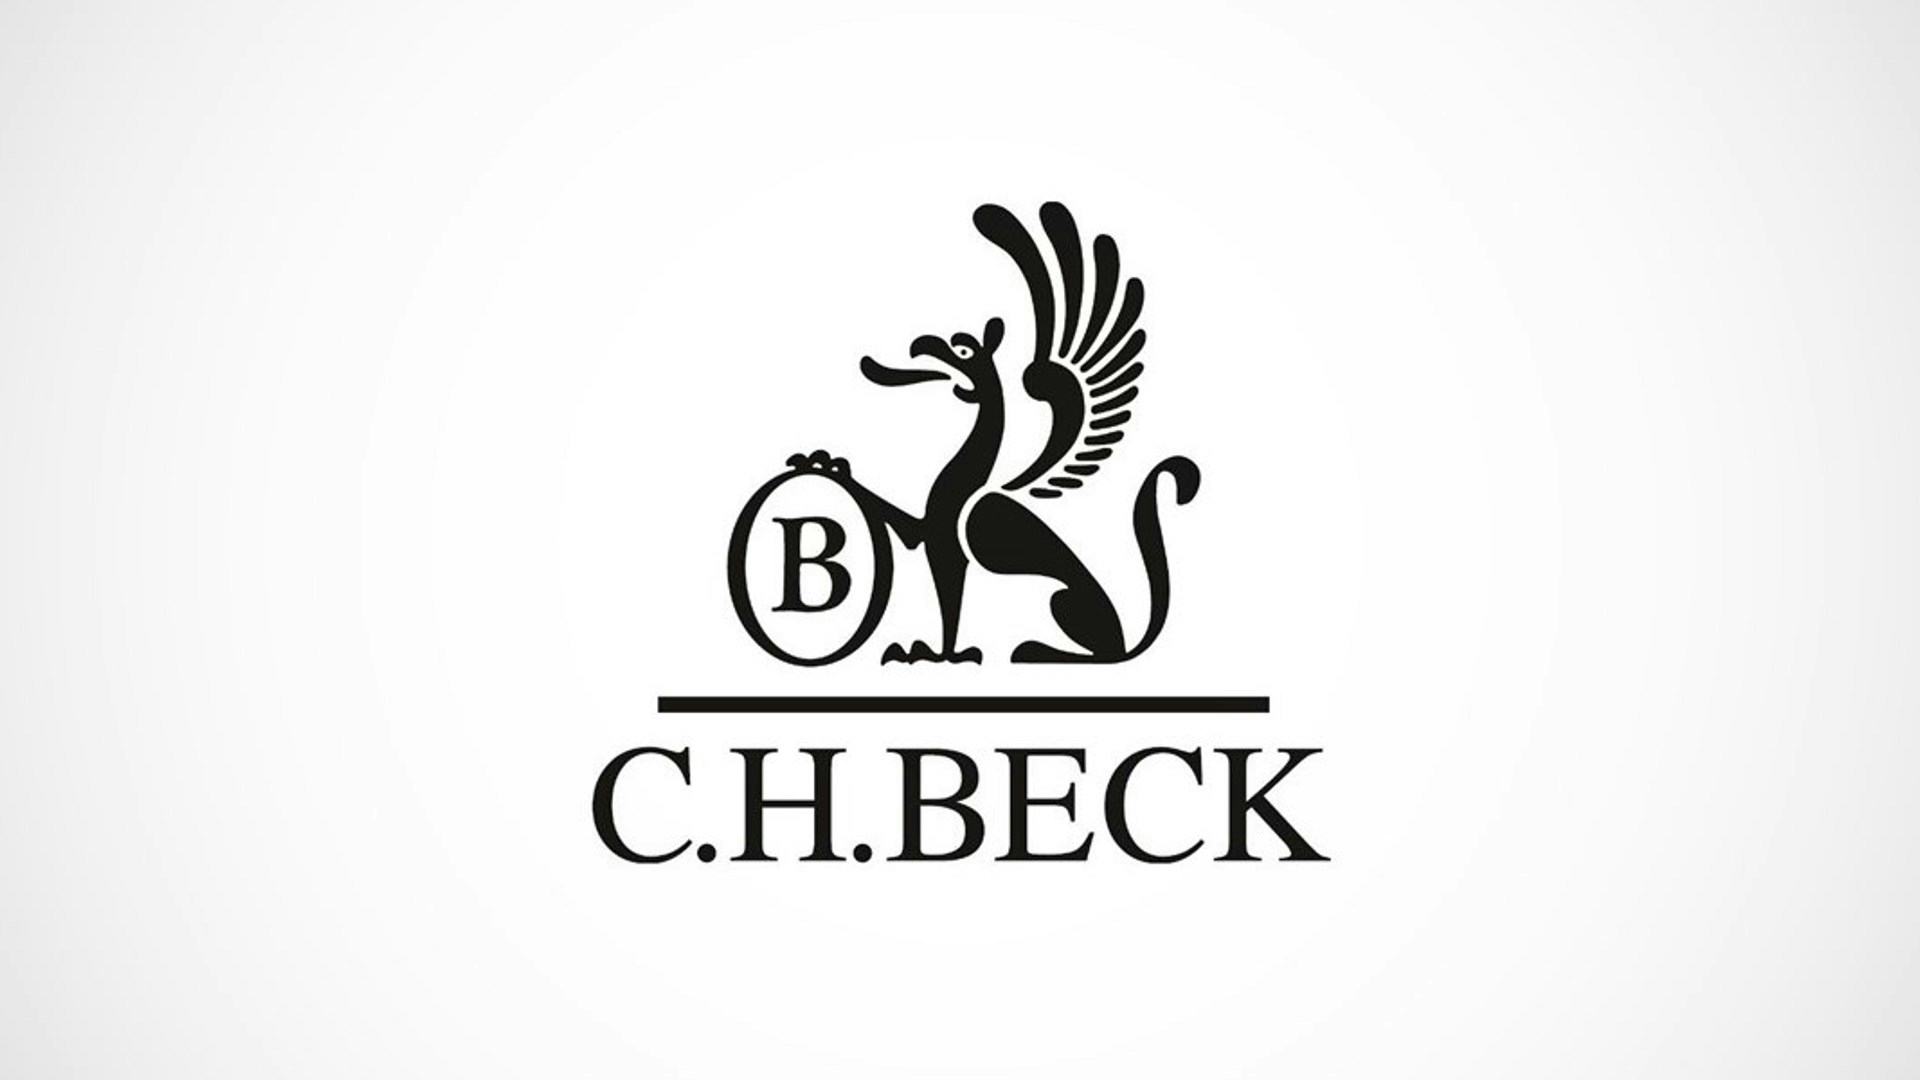 C.H. Beck Logo - byte5